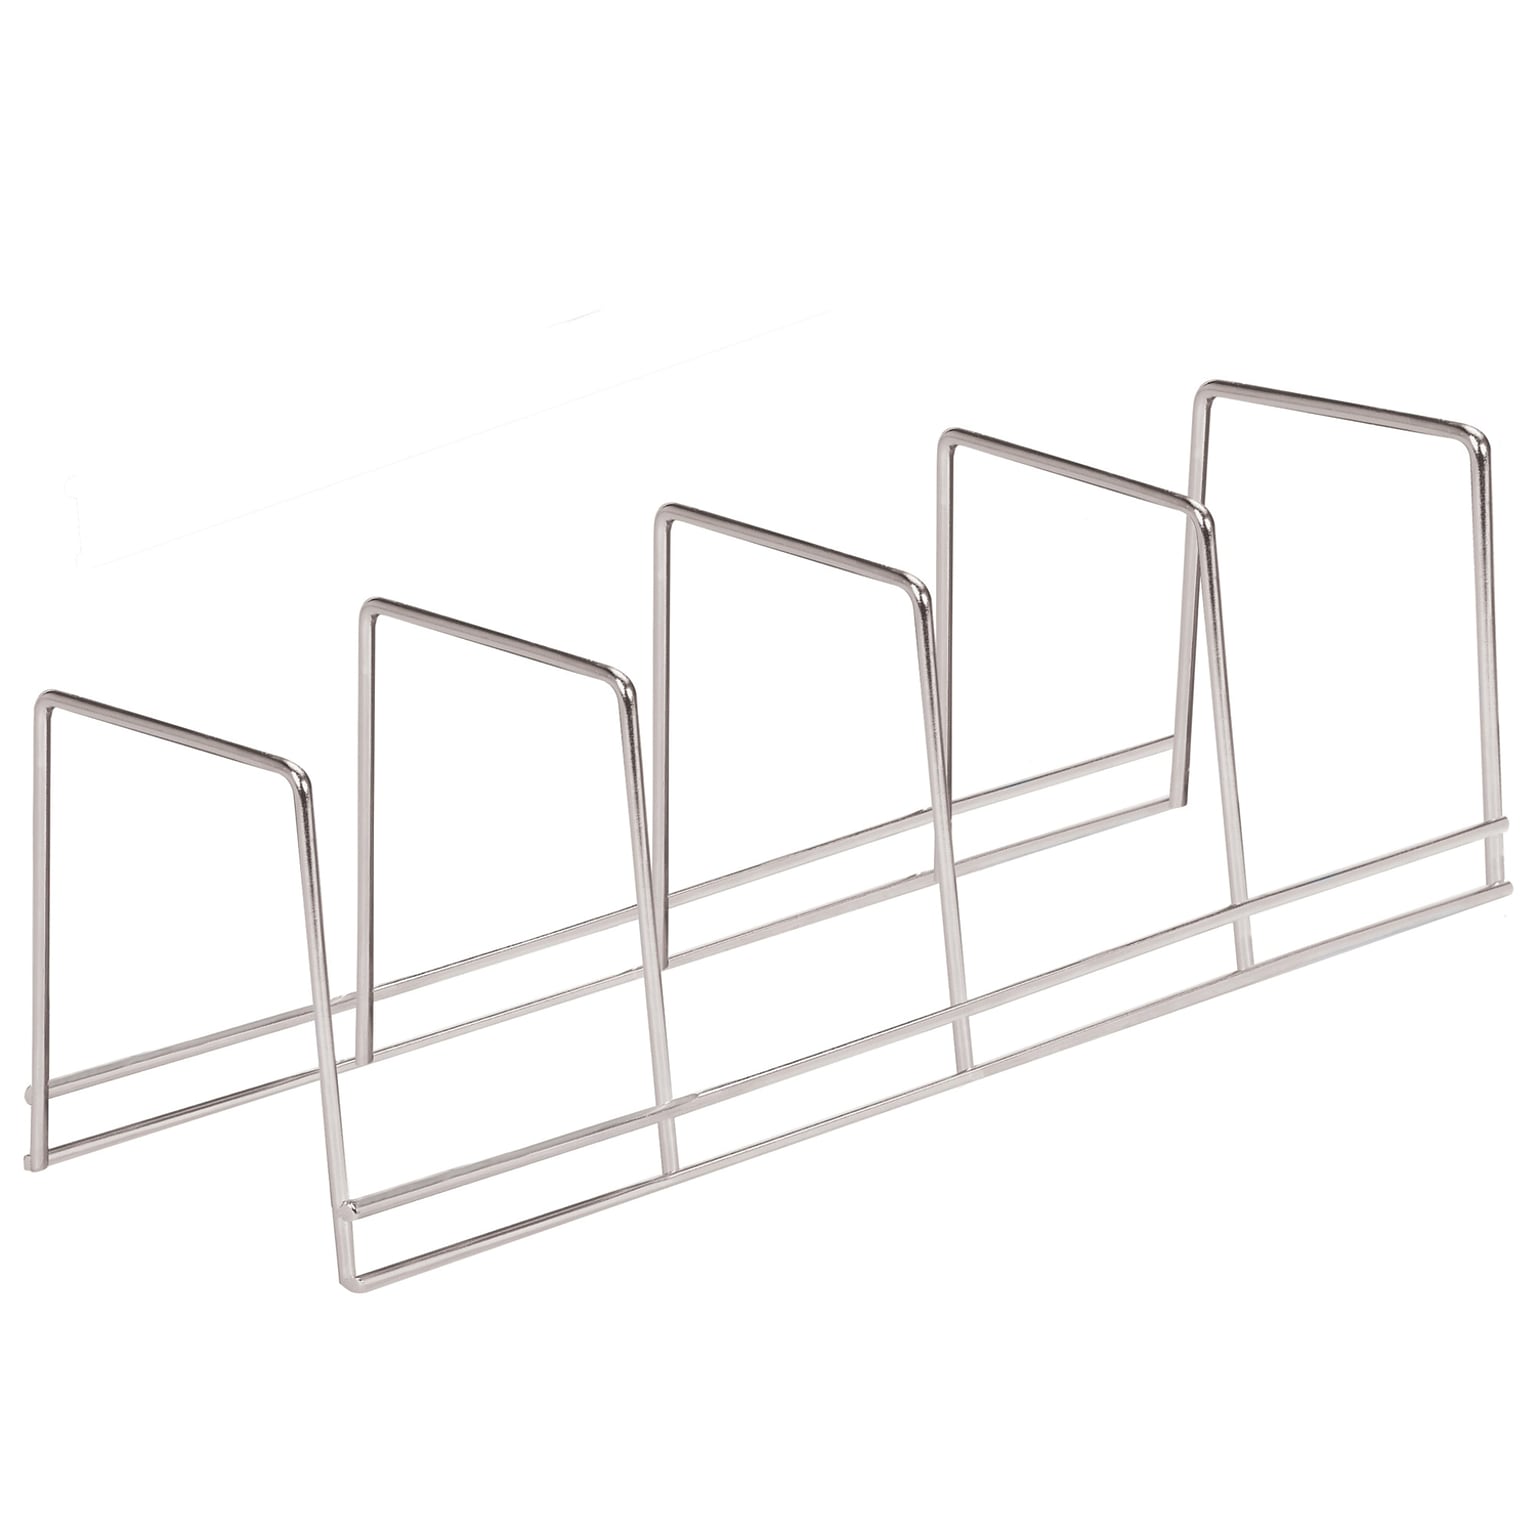 Better Houseware Chrome 4-Section Plate Rack, Silver (1494/4)